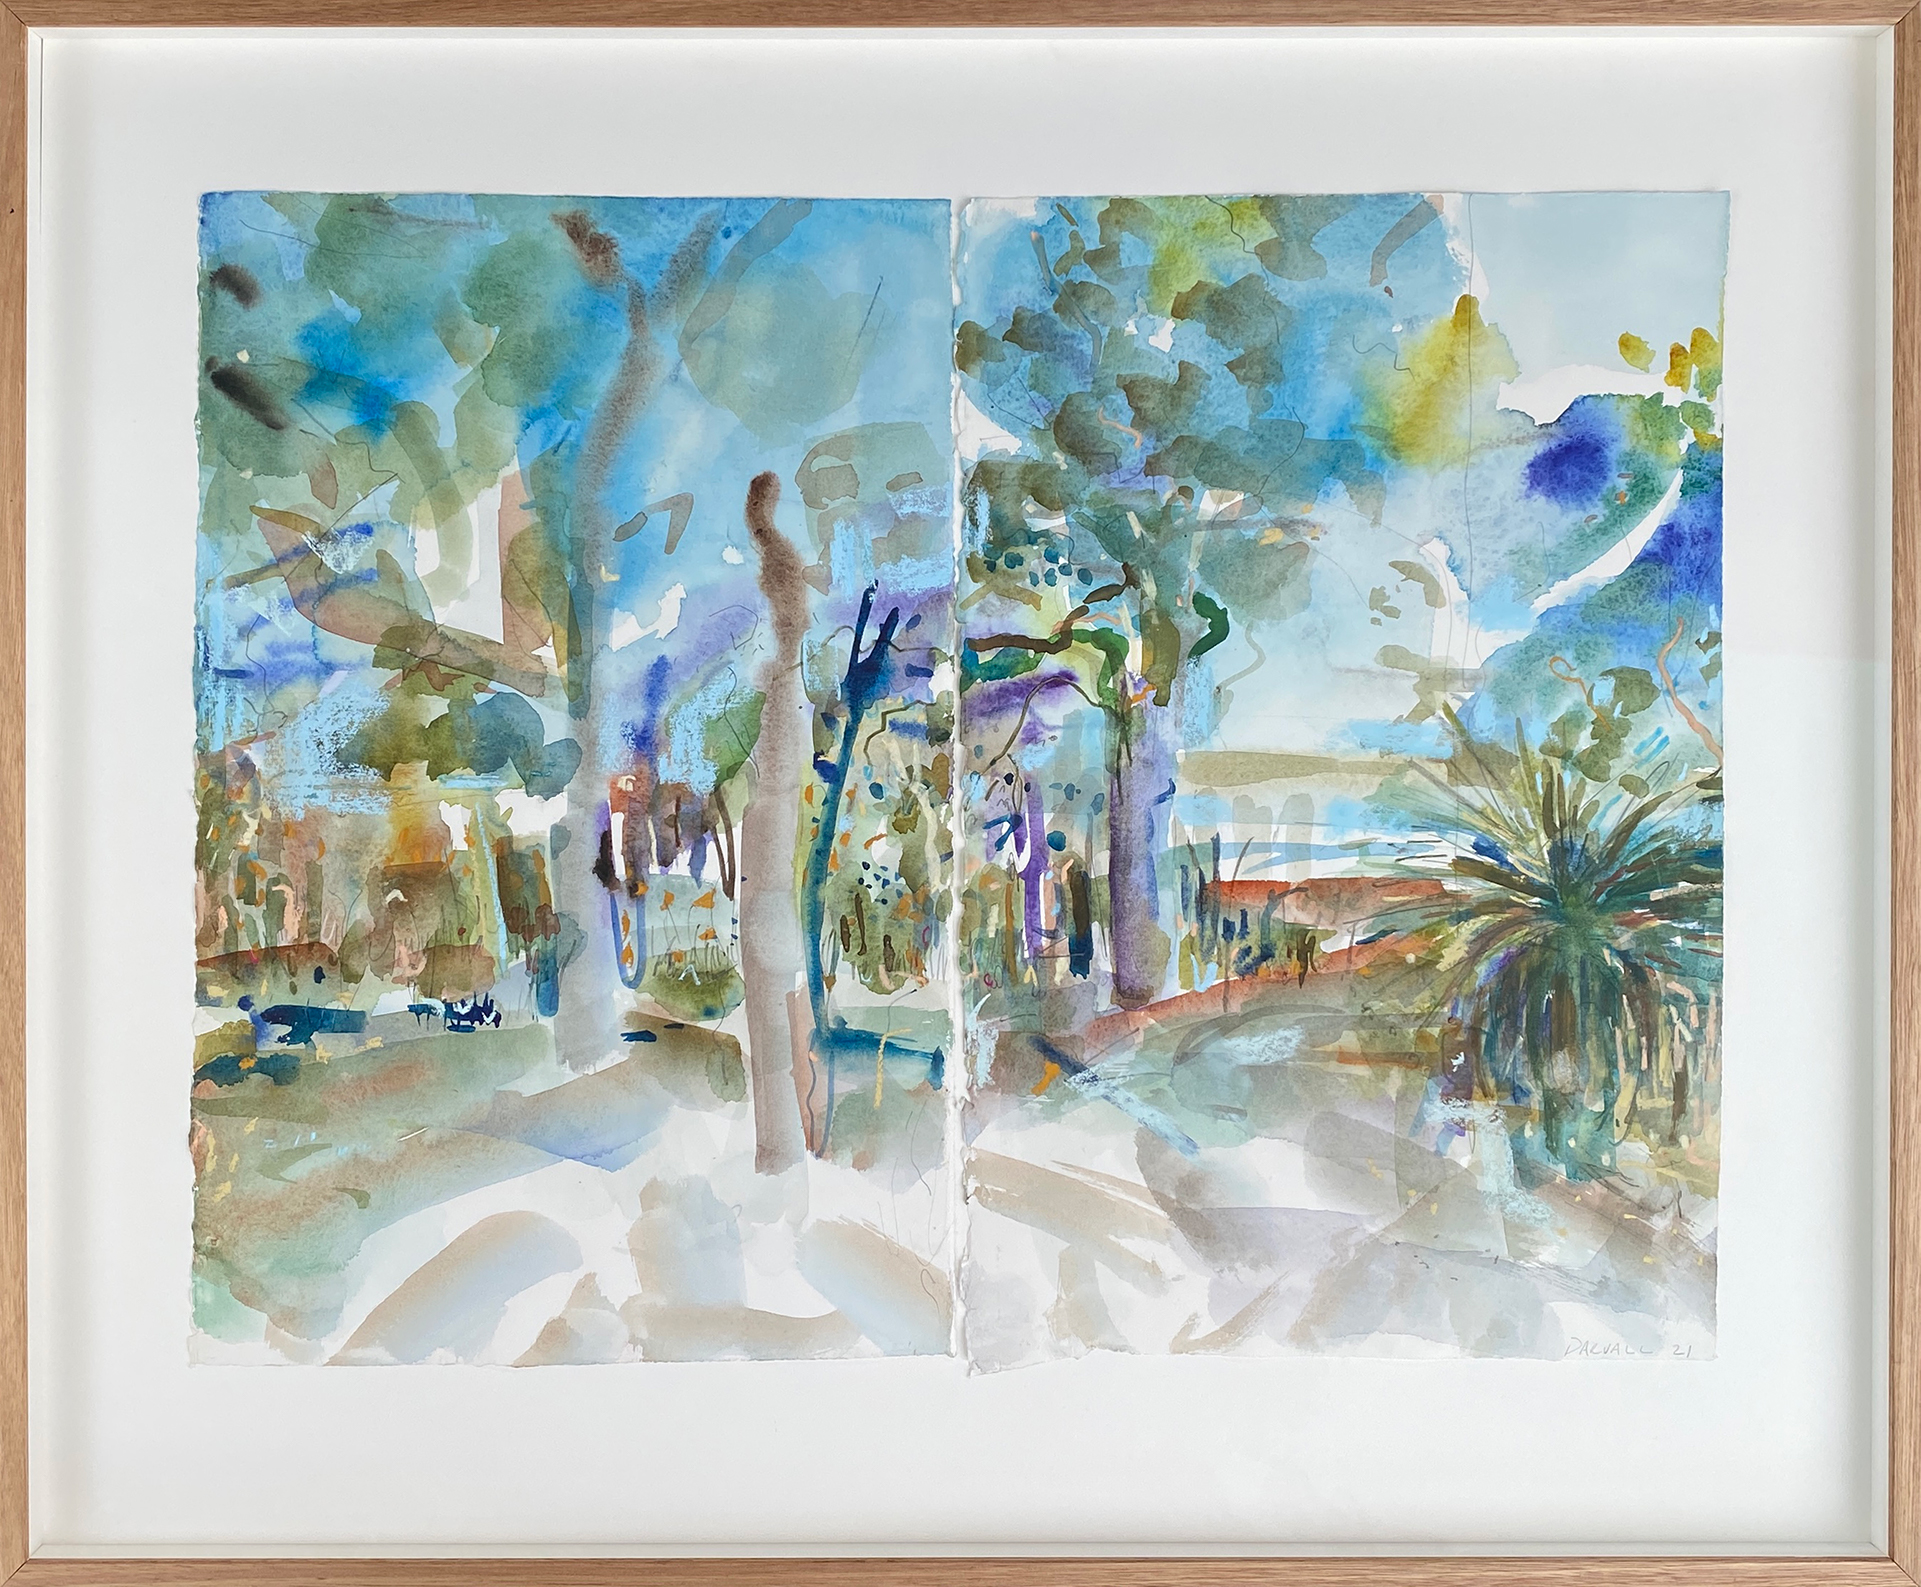 Jo Darvall, Wandoo #17, 51 x 68 cm-watercolour and pencil, $2450